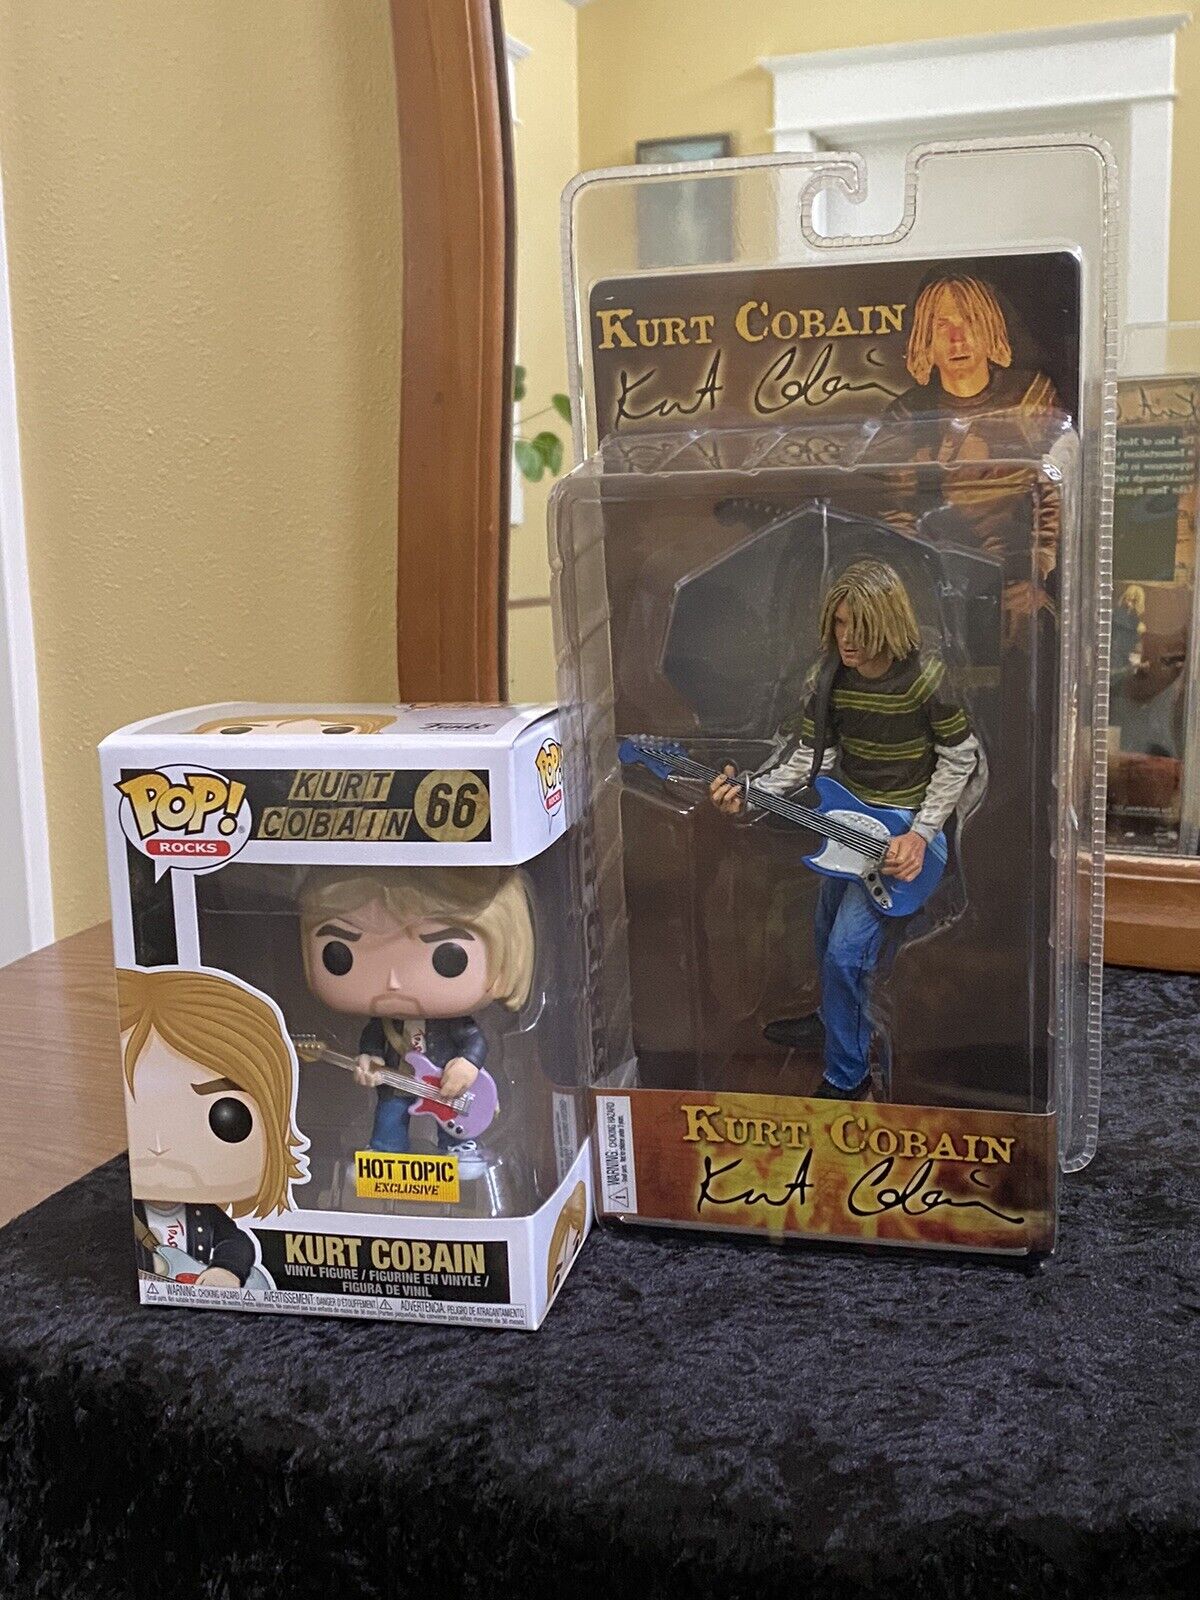 Kurt Cobain Figures (2) Funko Pop Vinyl Figure and NECA Figure - BRAND NEW